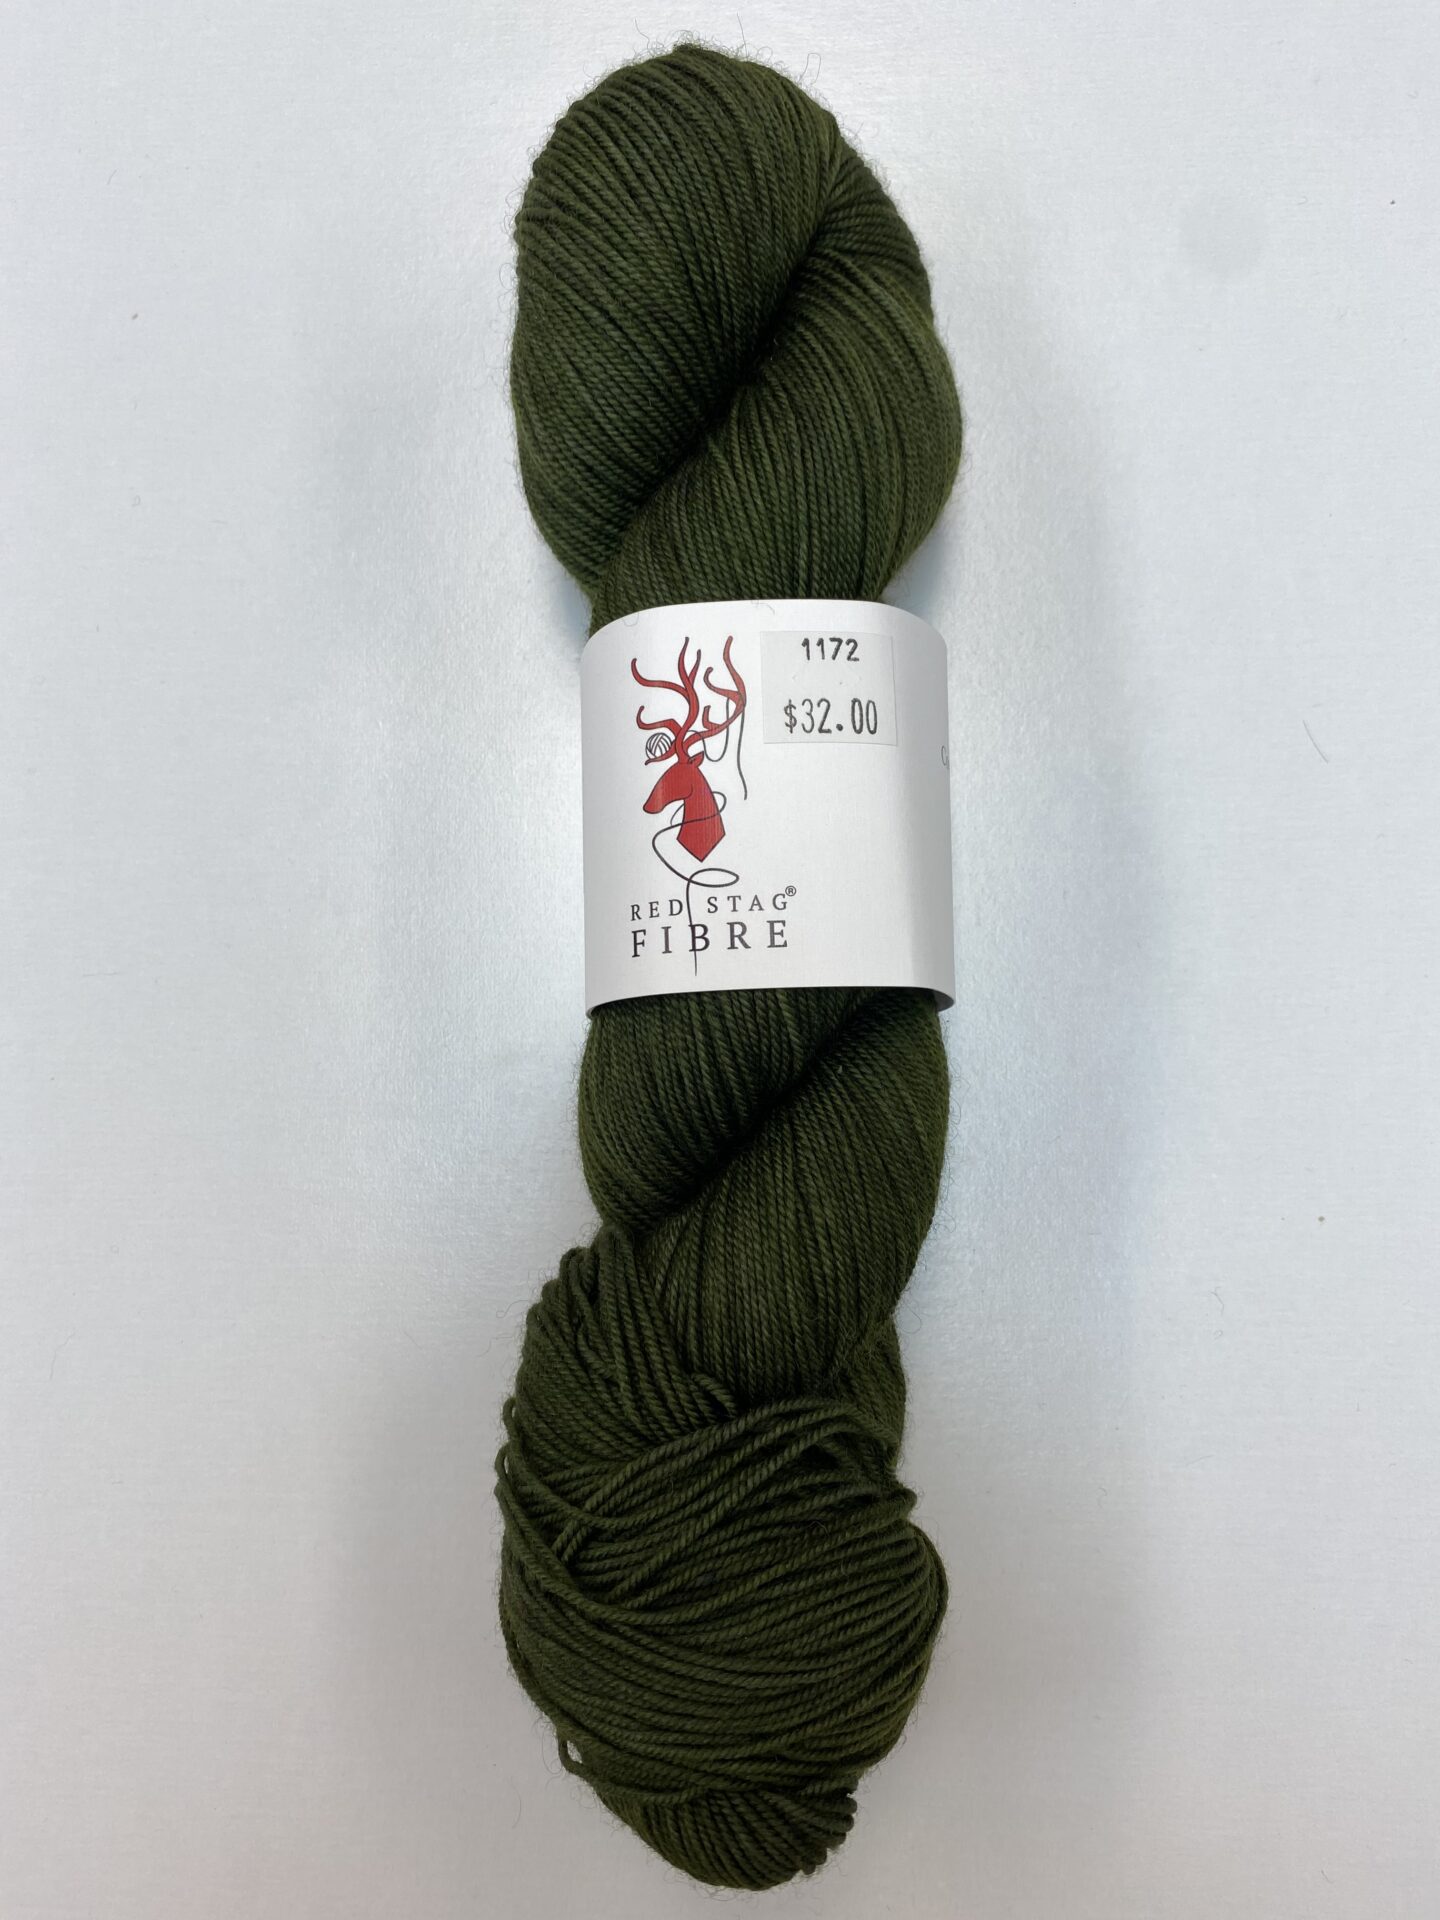 Red Stag Fibre Wool Bundle in Deep Green